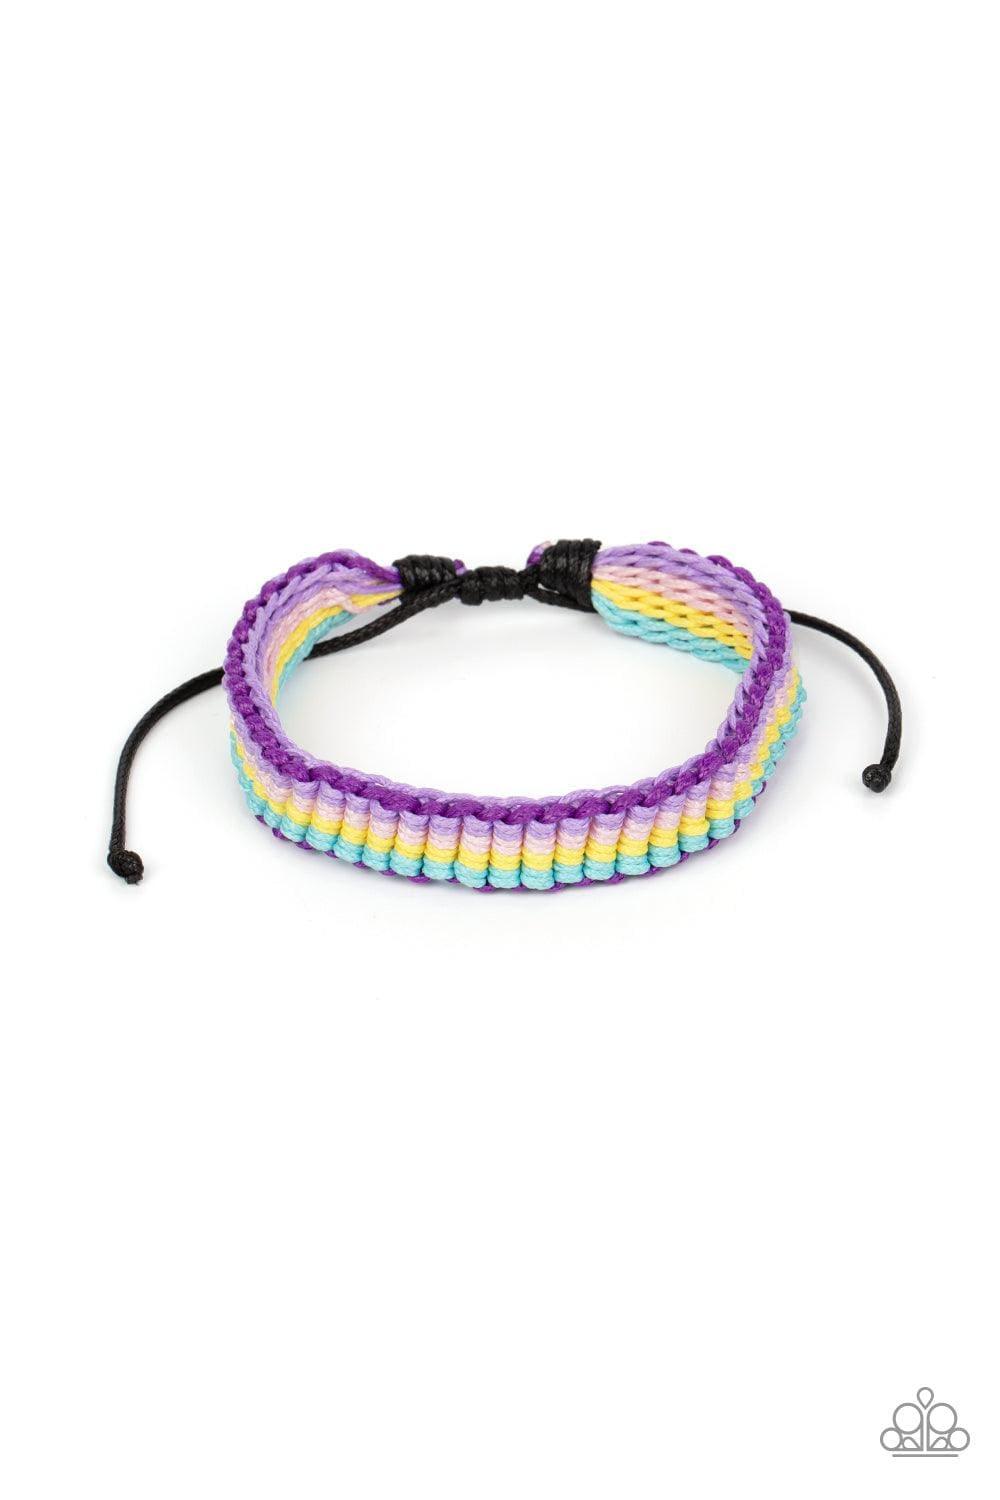 Paparazzi Accessories - Campfire Craft - Multicolor Urban Bracelet - Bling by JessieK